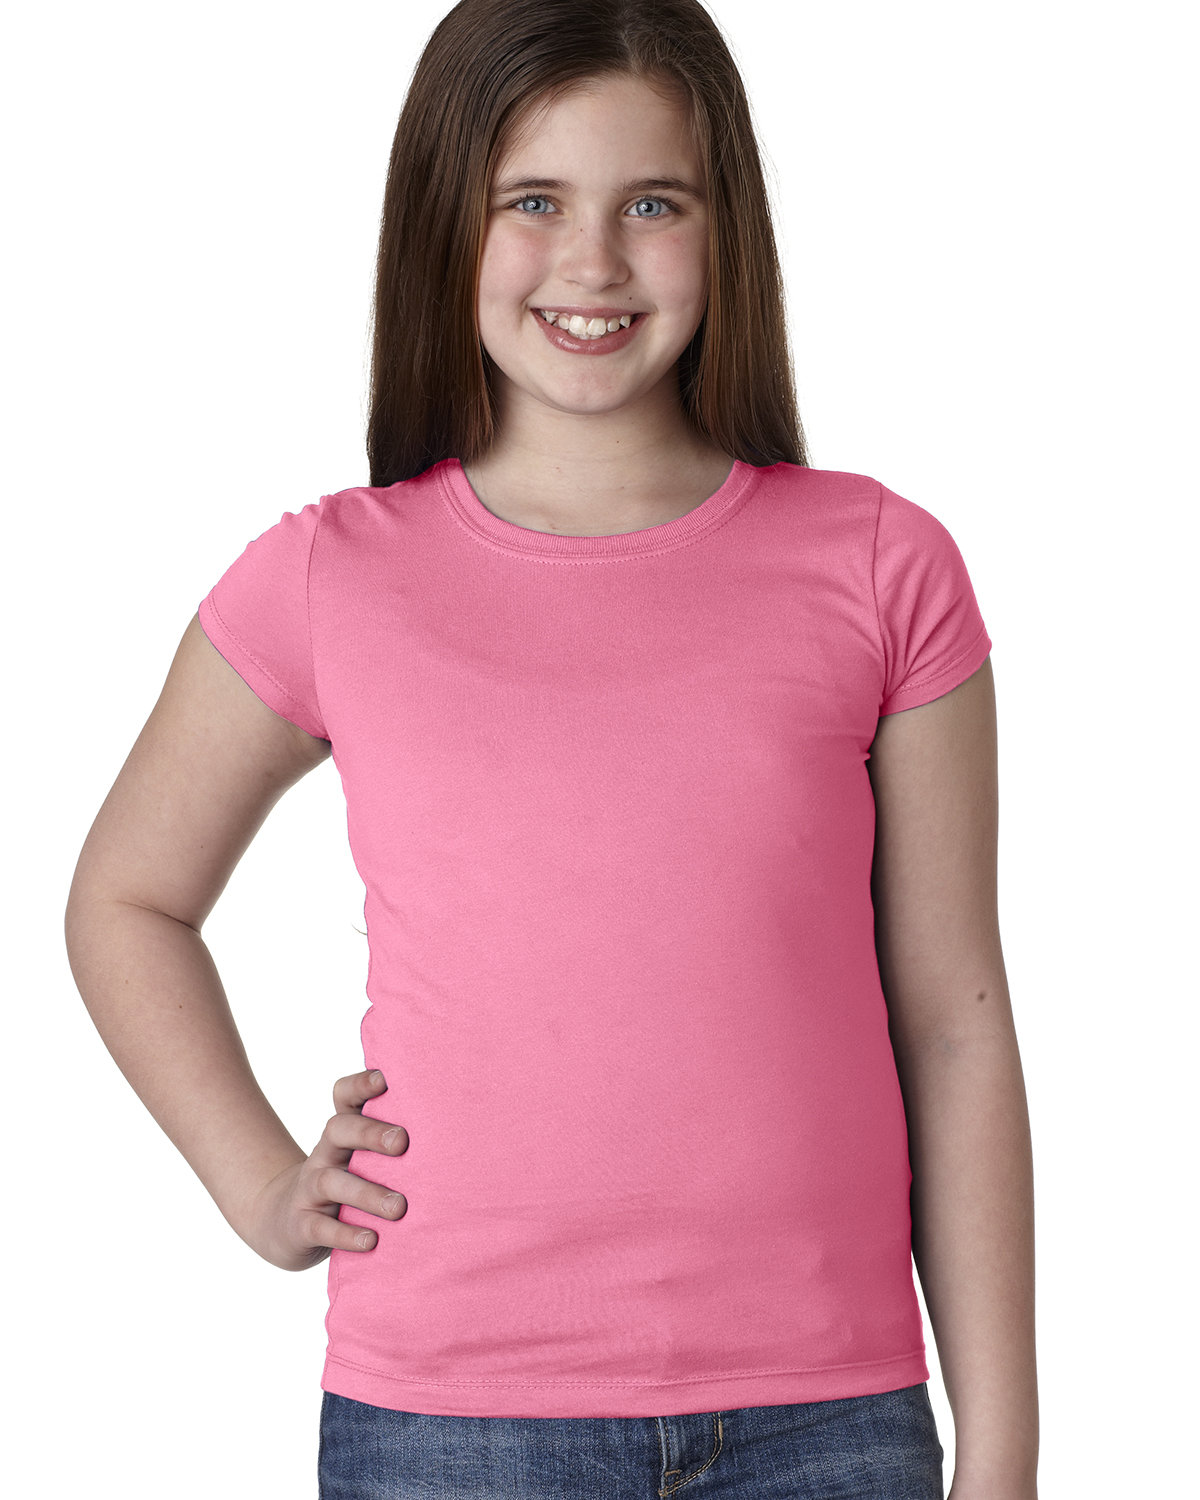 Next Level N3710 Youth Girls’ Princess T-Shirt - Hot Pink - XS